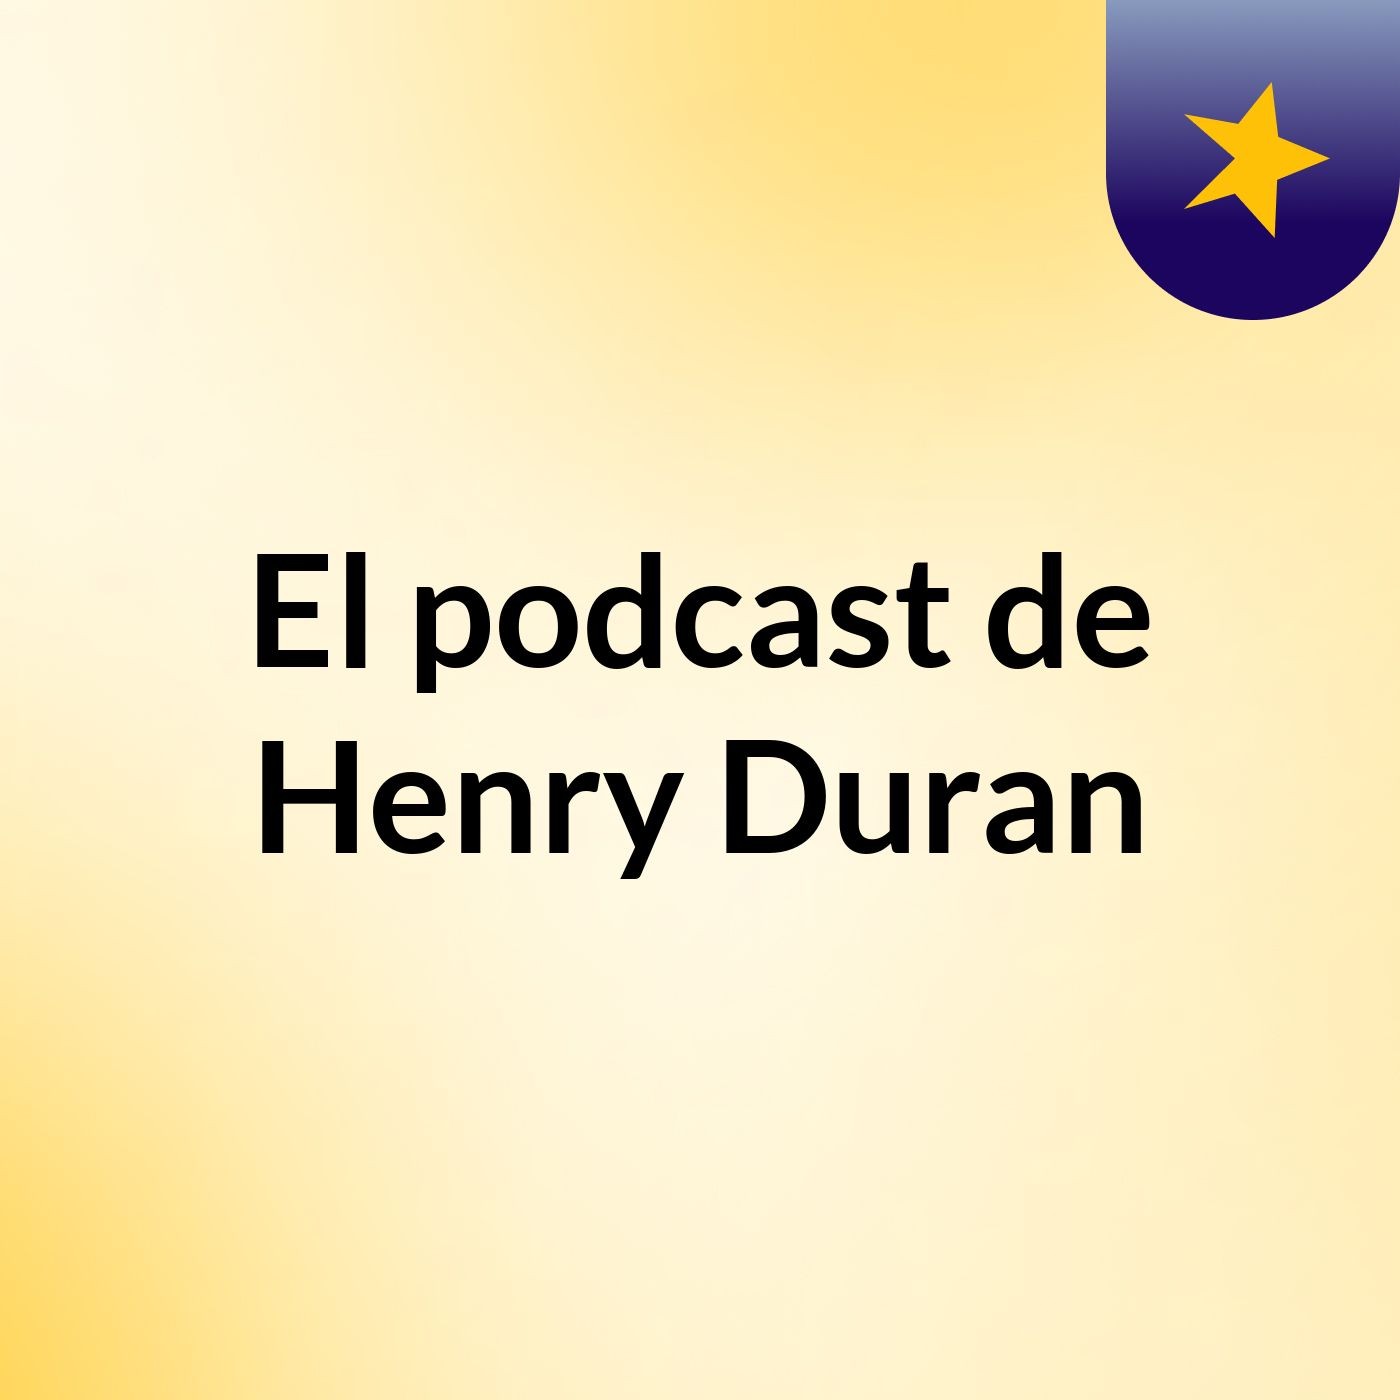 El podcast de Henry Duran